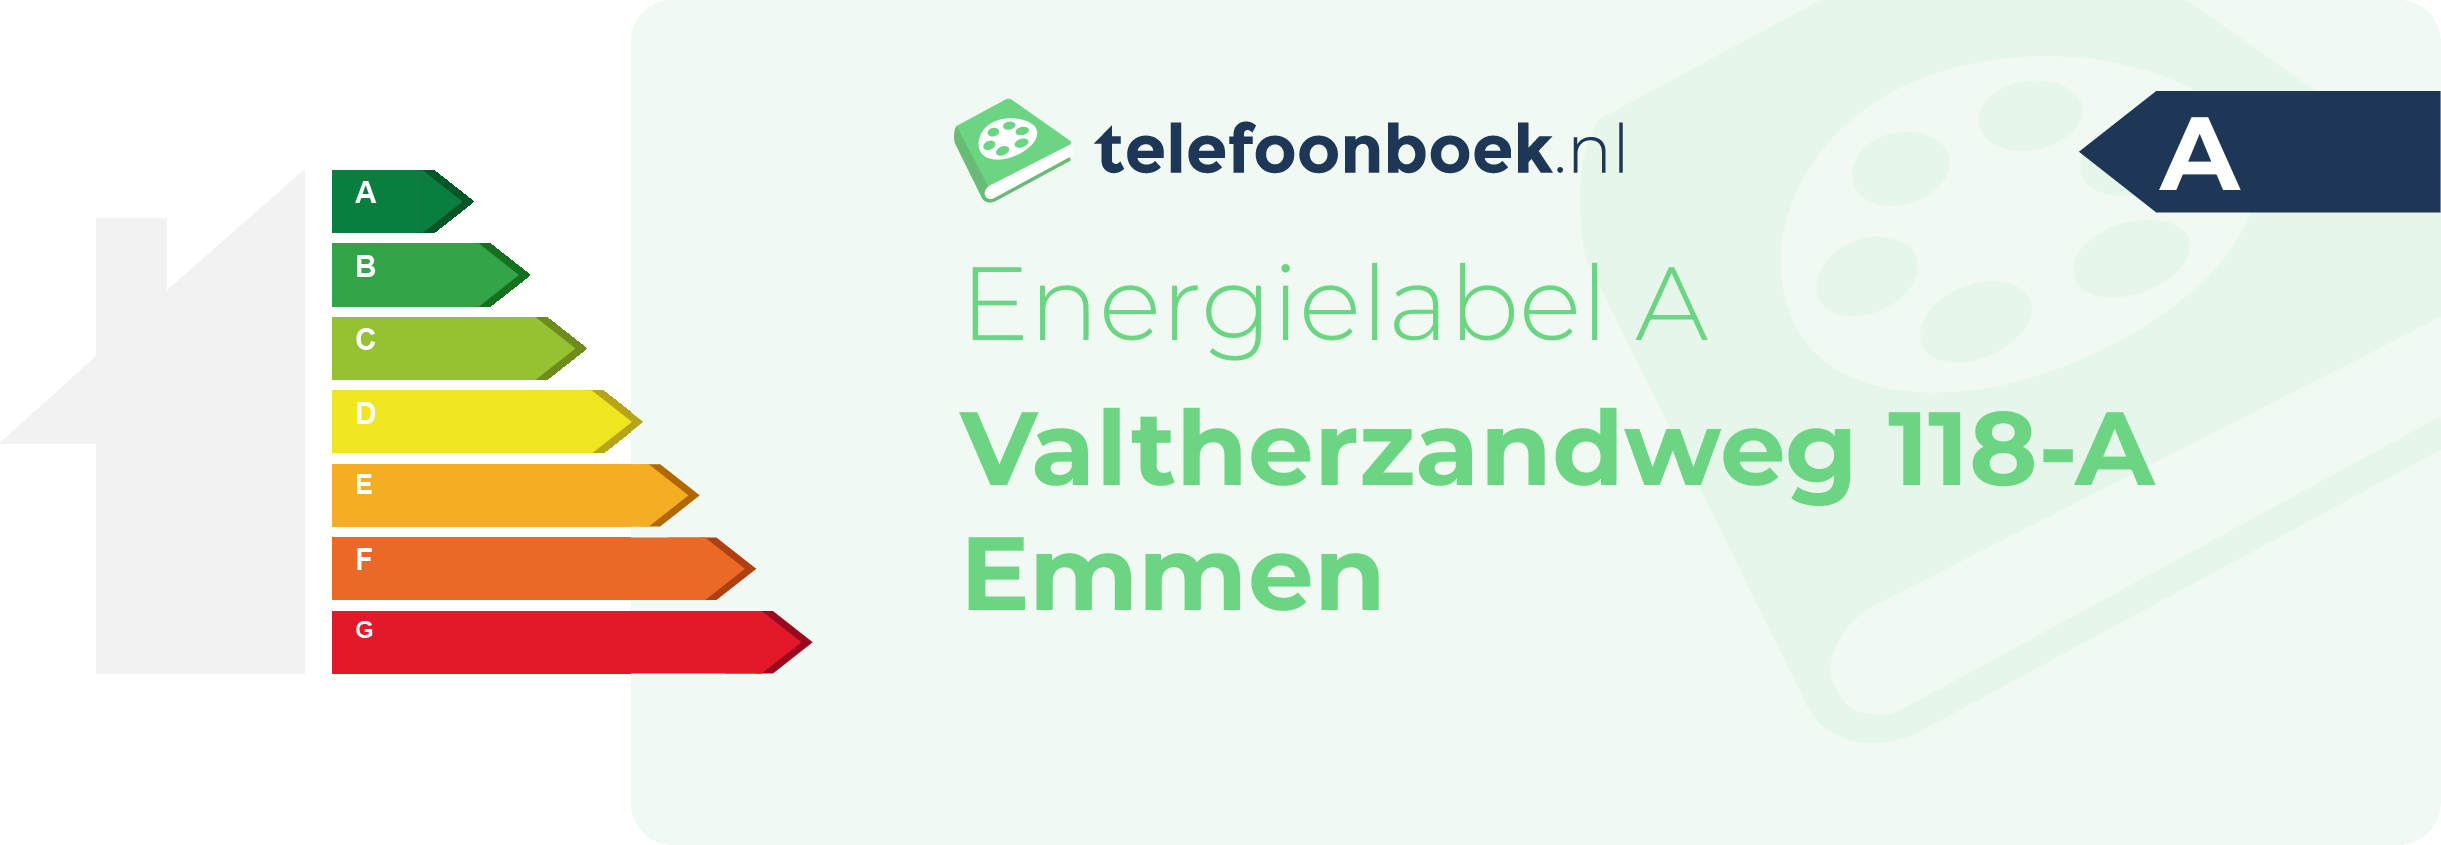 Energielabel Valtherzandweg 118-A Emmen